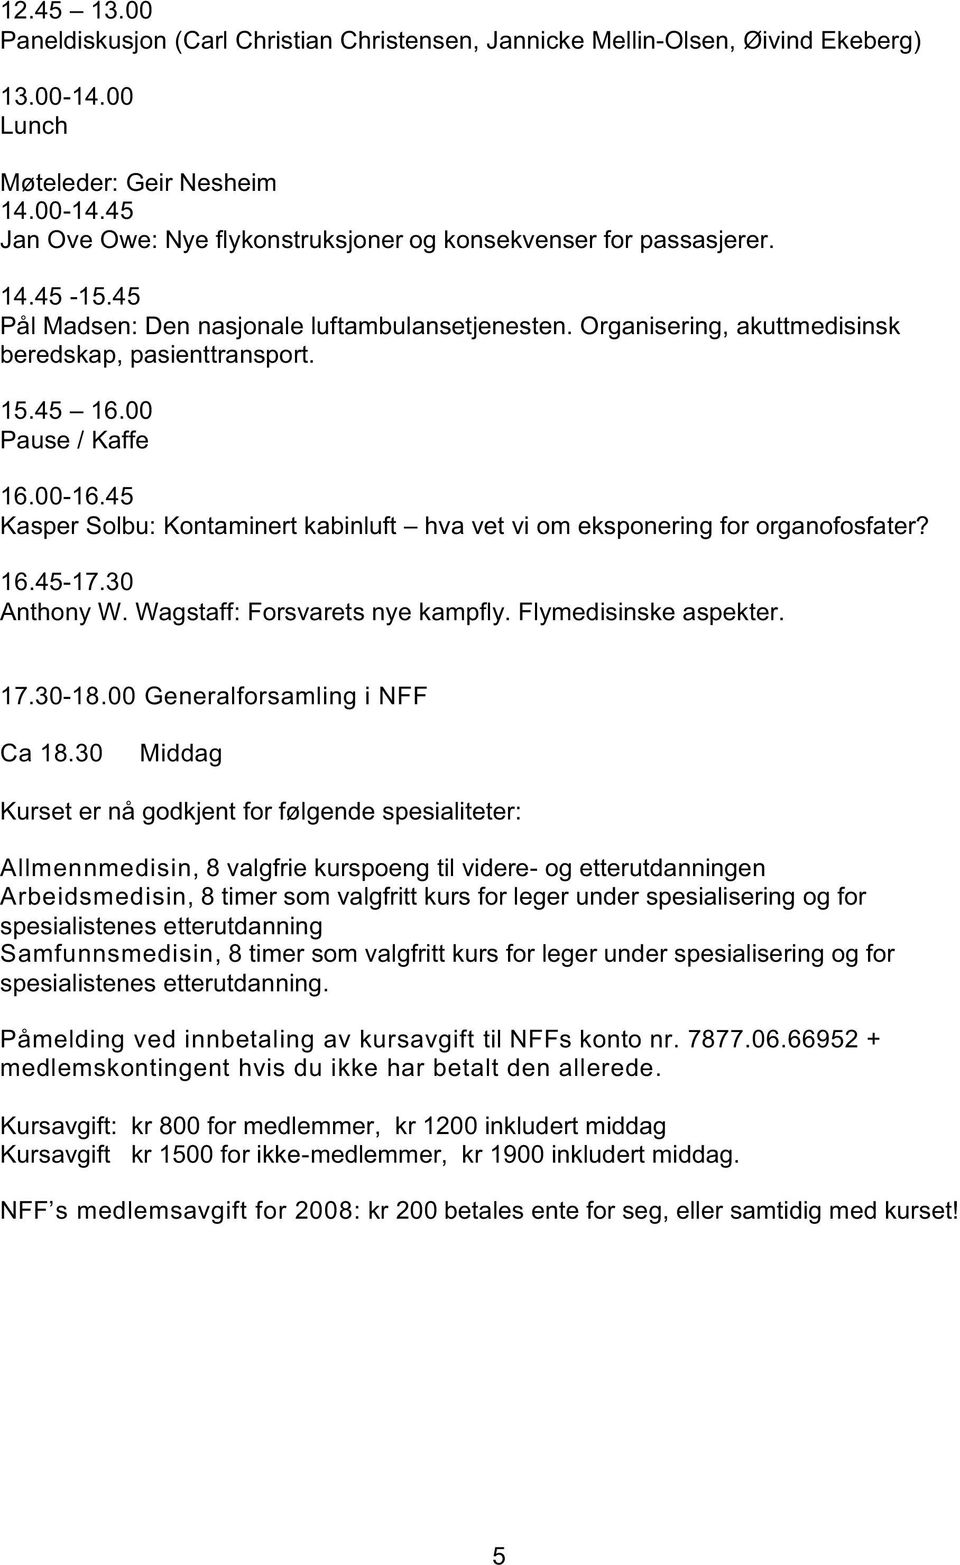 45 Kasper Solbu: Kontaminert kabinluft hva vet vi om eksponering for organofosfater? 16.45-17.30 Anthony W. Wagstaff: Forsvarets nye kampfly. Flymedisinske aspekter. 17.30-18.